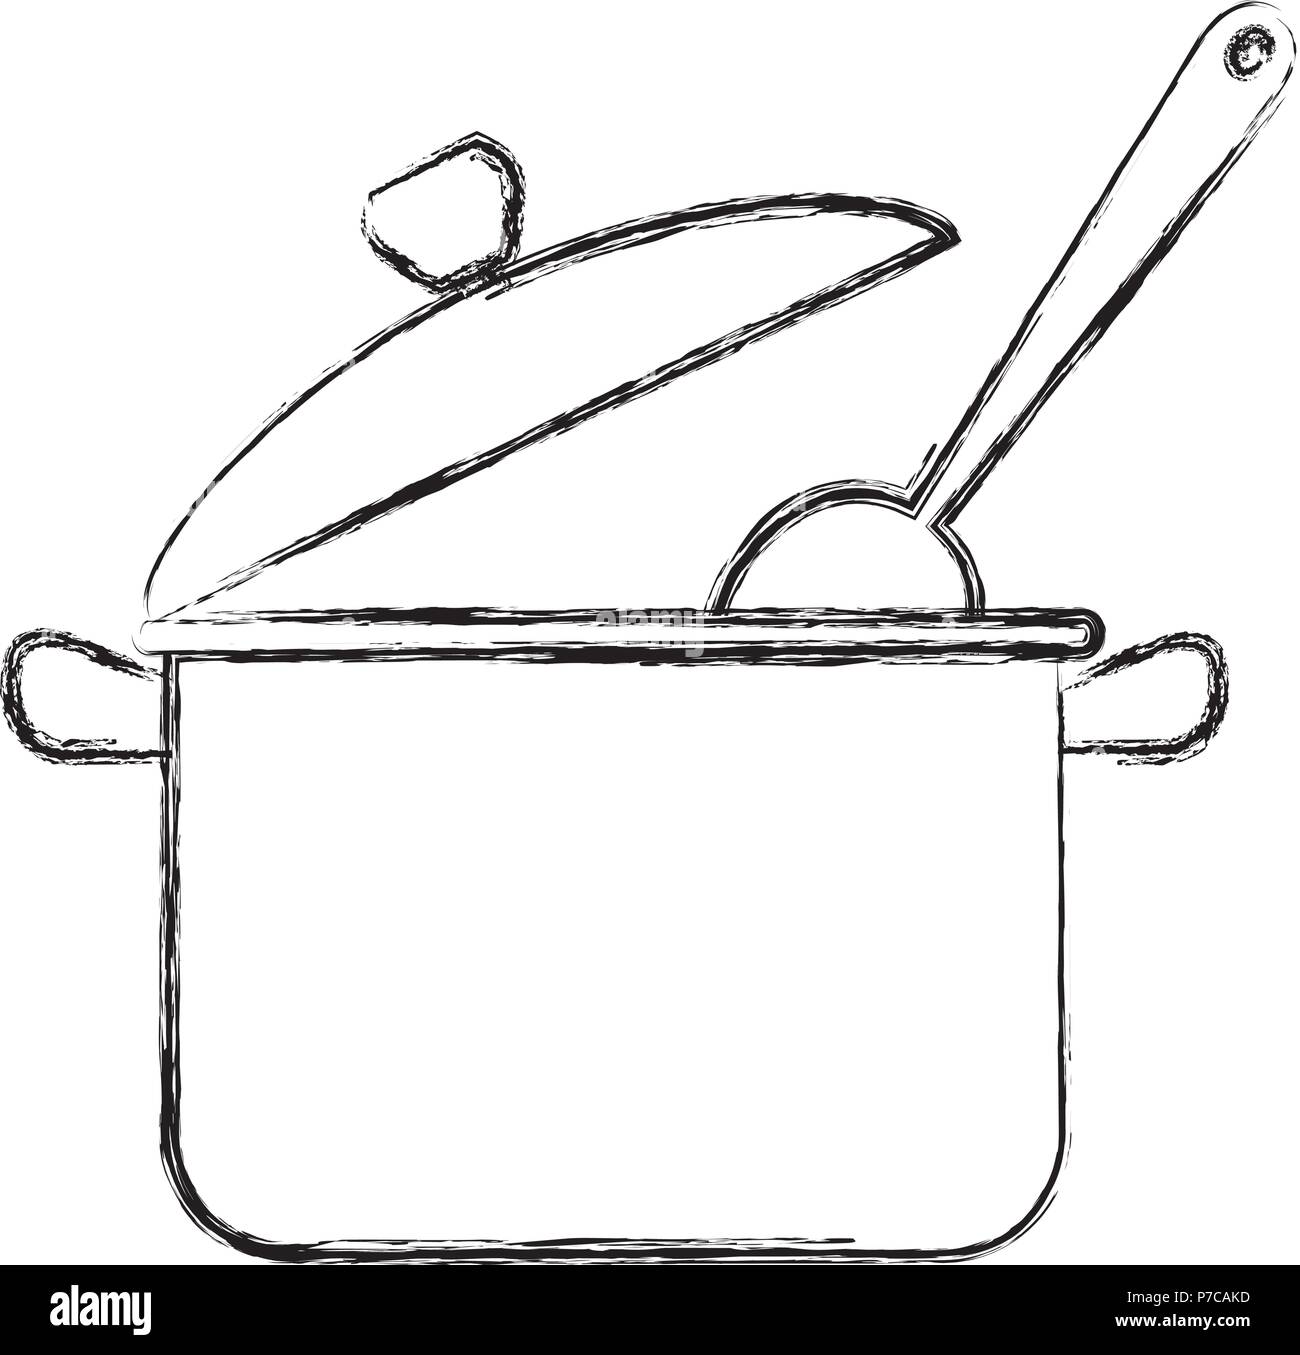 Küche Topf mit Löffel isolierte Symbol Vektor illustration Design  Stock-Vektorgrafik - Alamy